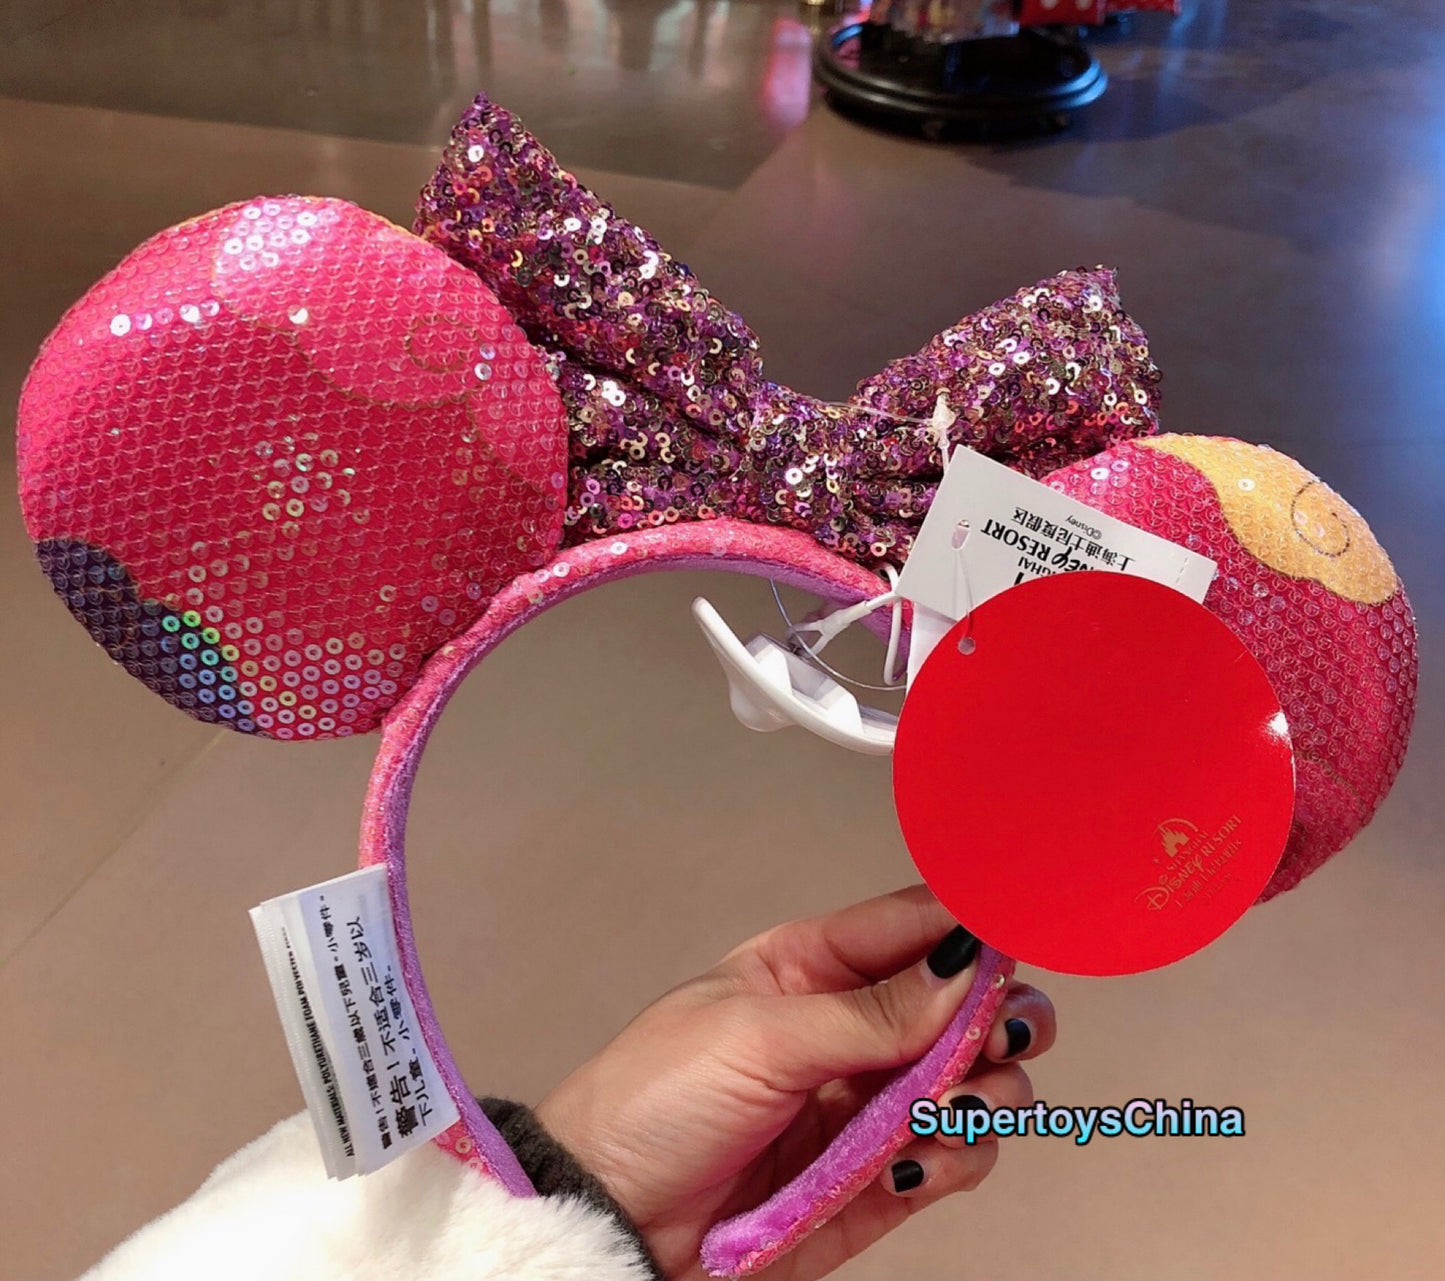 Disney 2021 Lunar New year sequined pink Minnie mouse ear headband shanghai disneyland